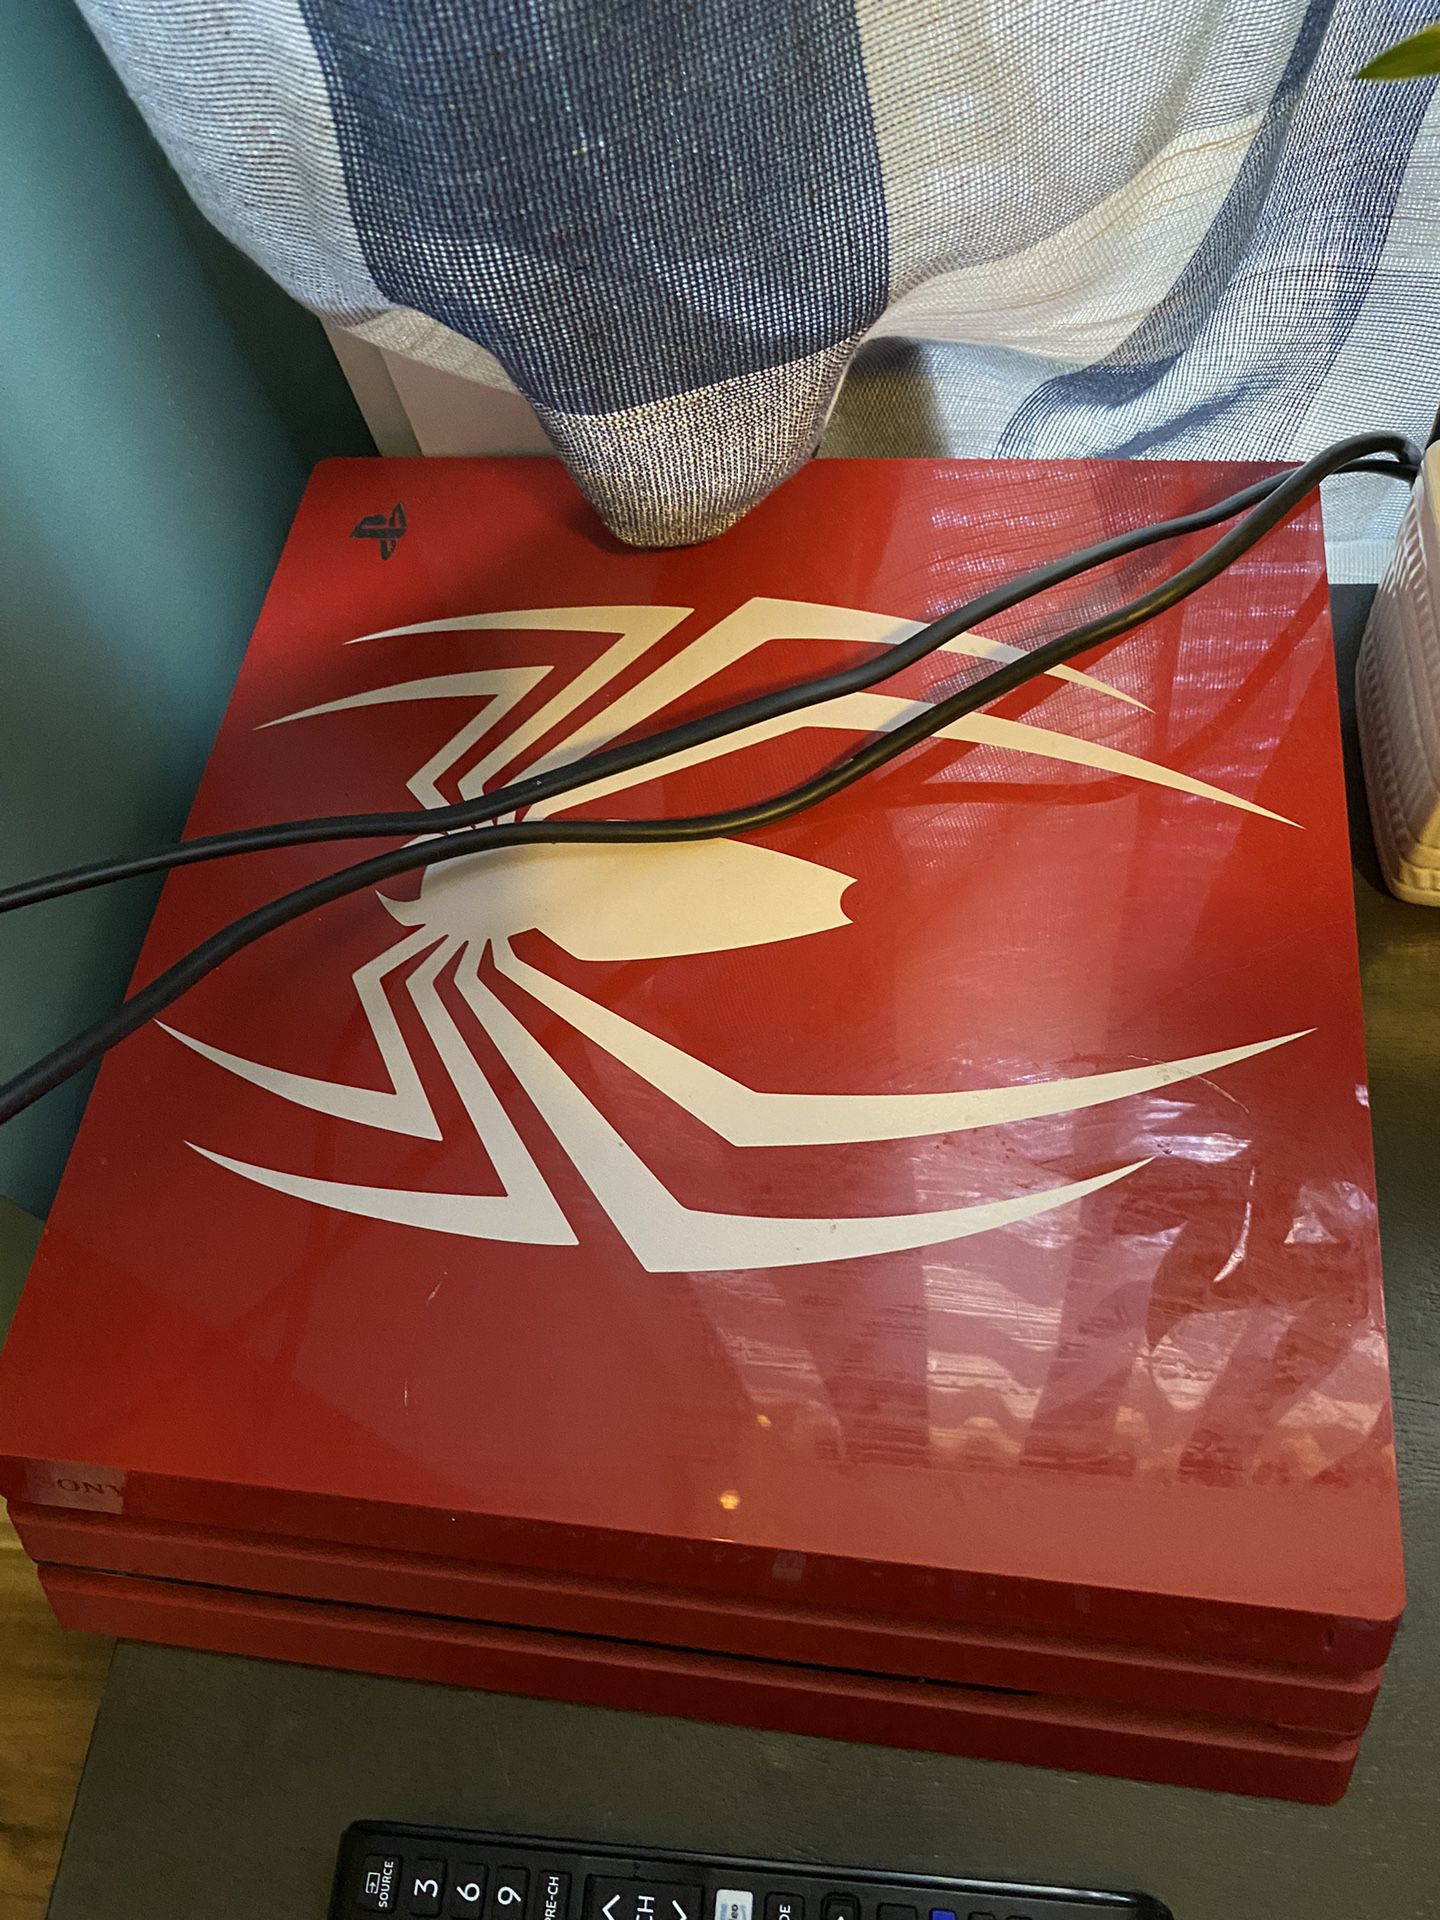 PS4 Pro Spider-man edition